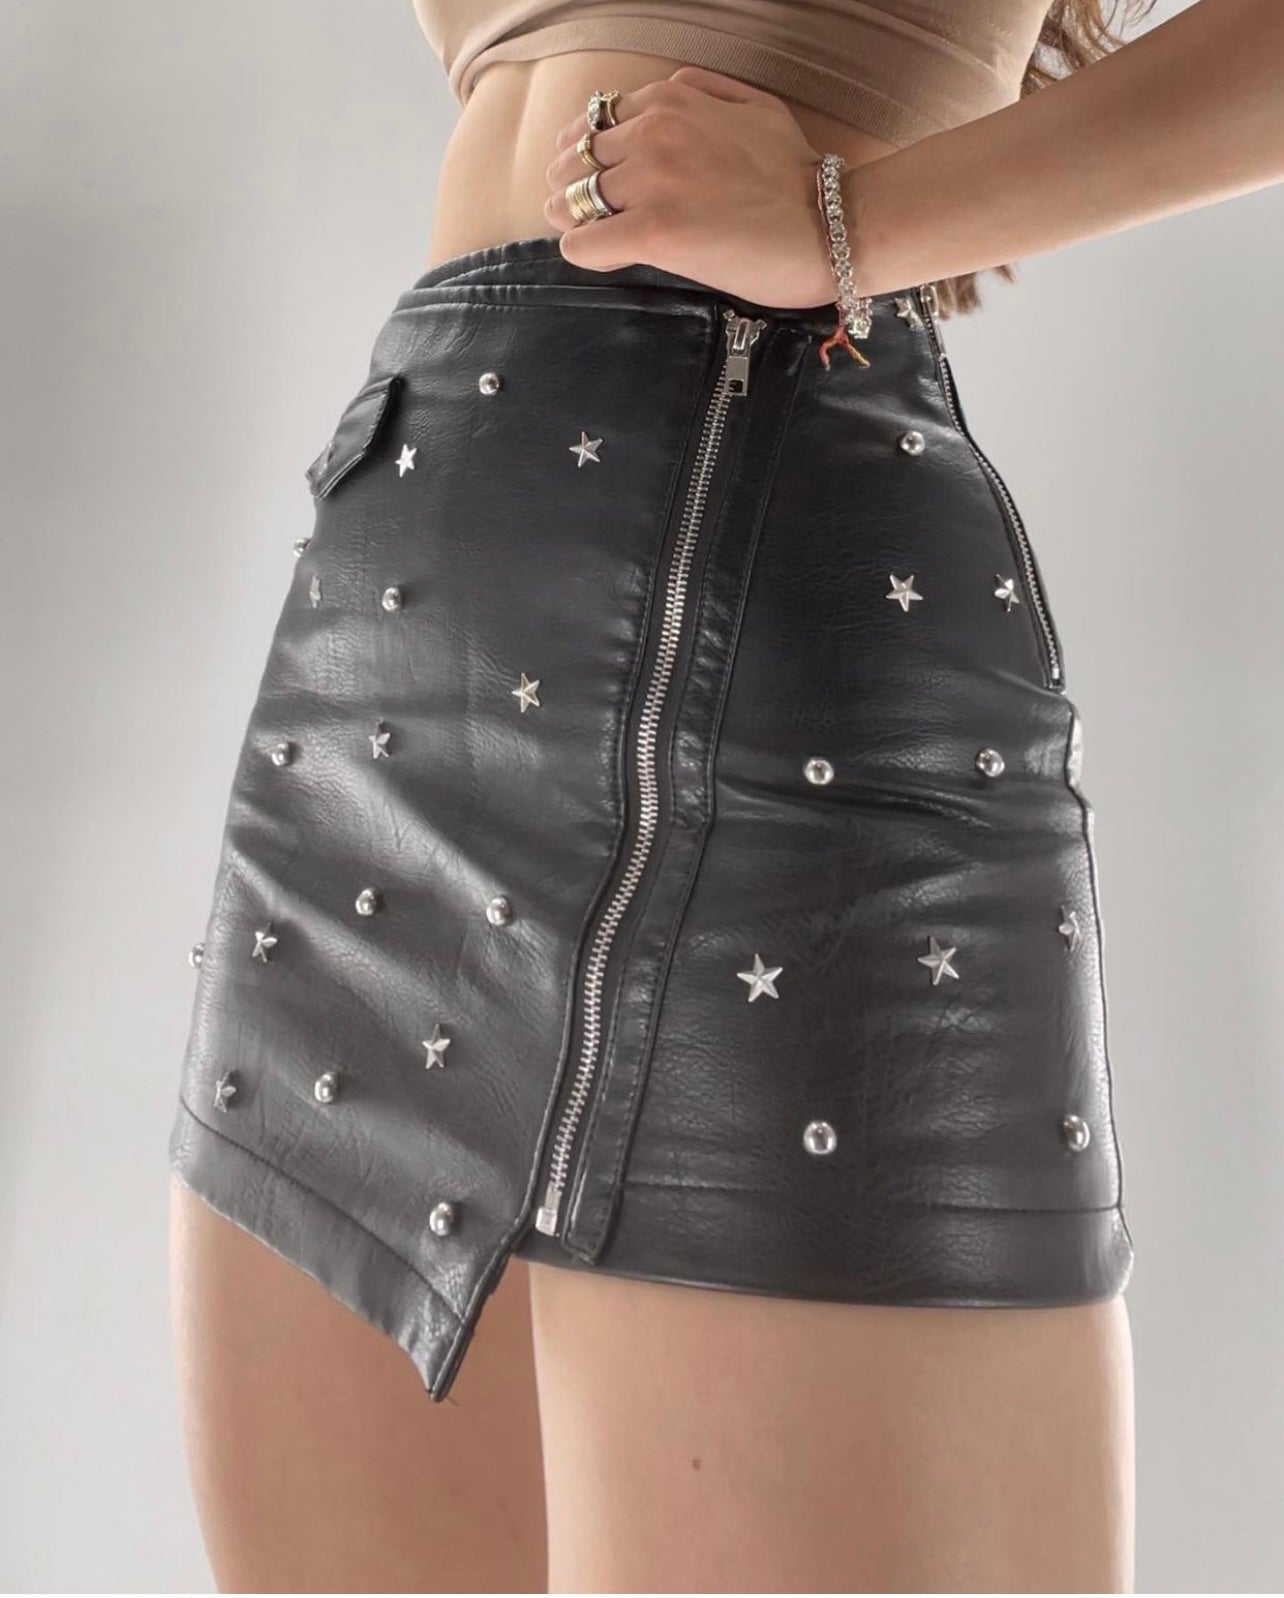 Leather Studded Mini Skirt (SzS)